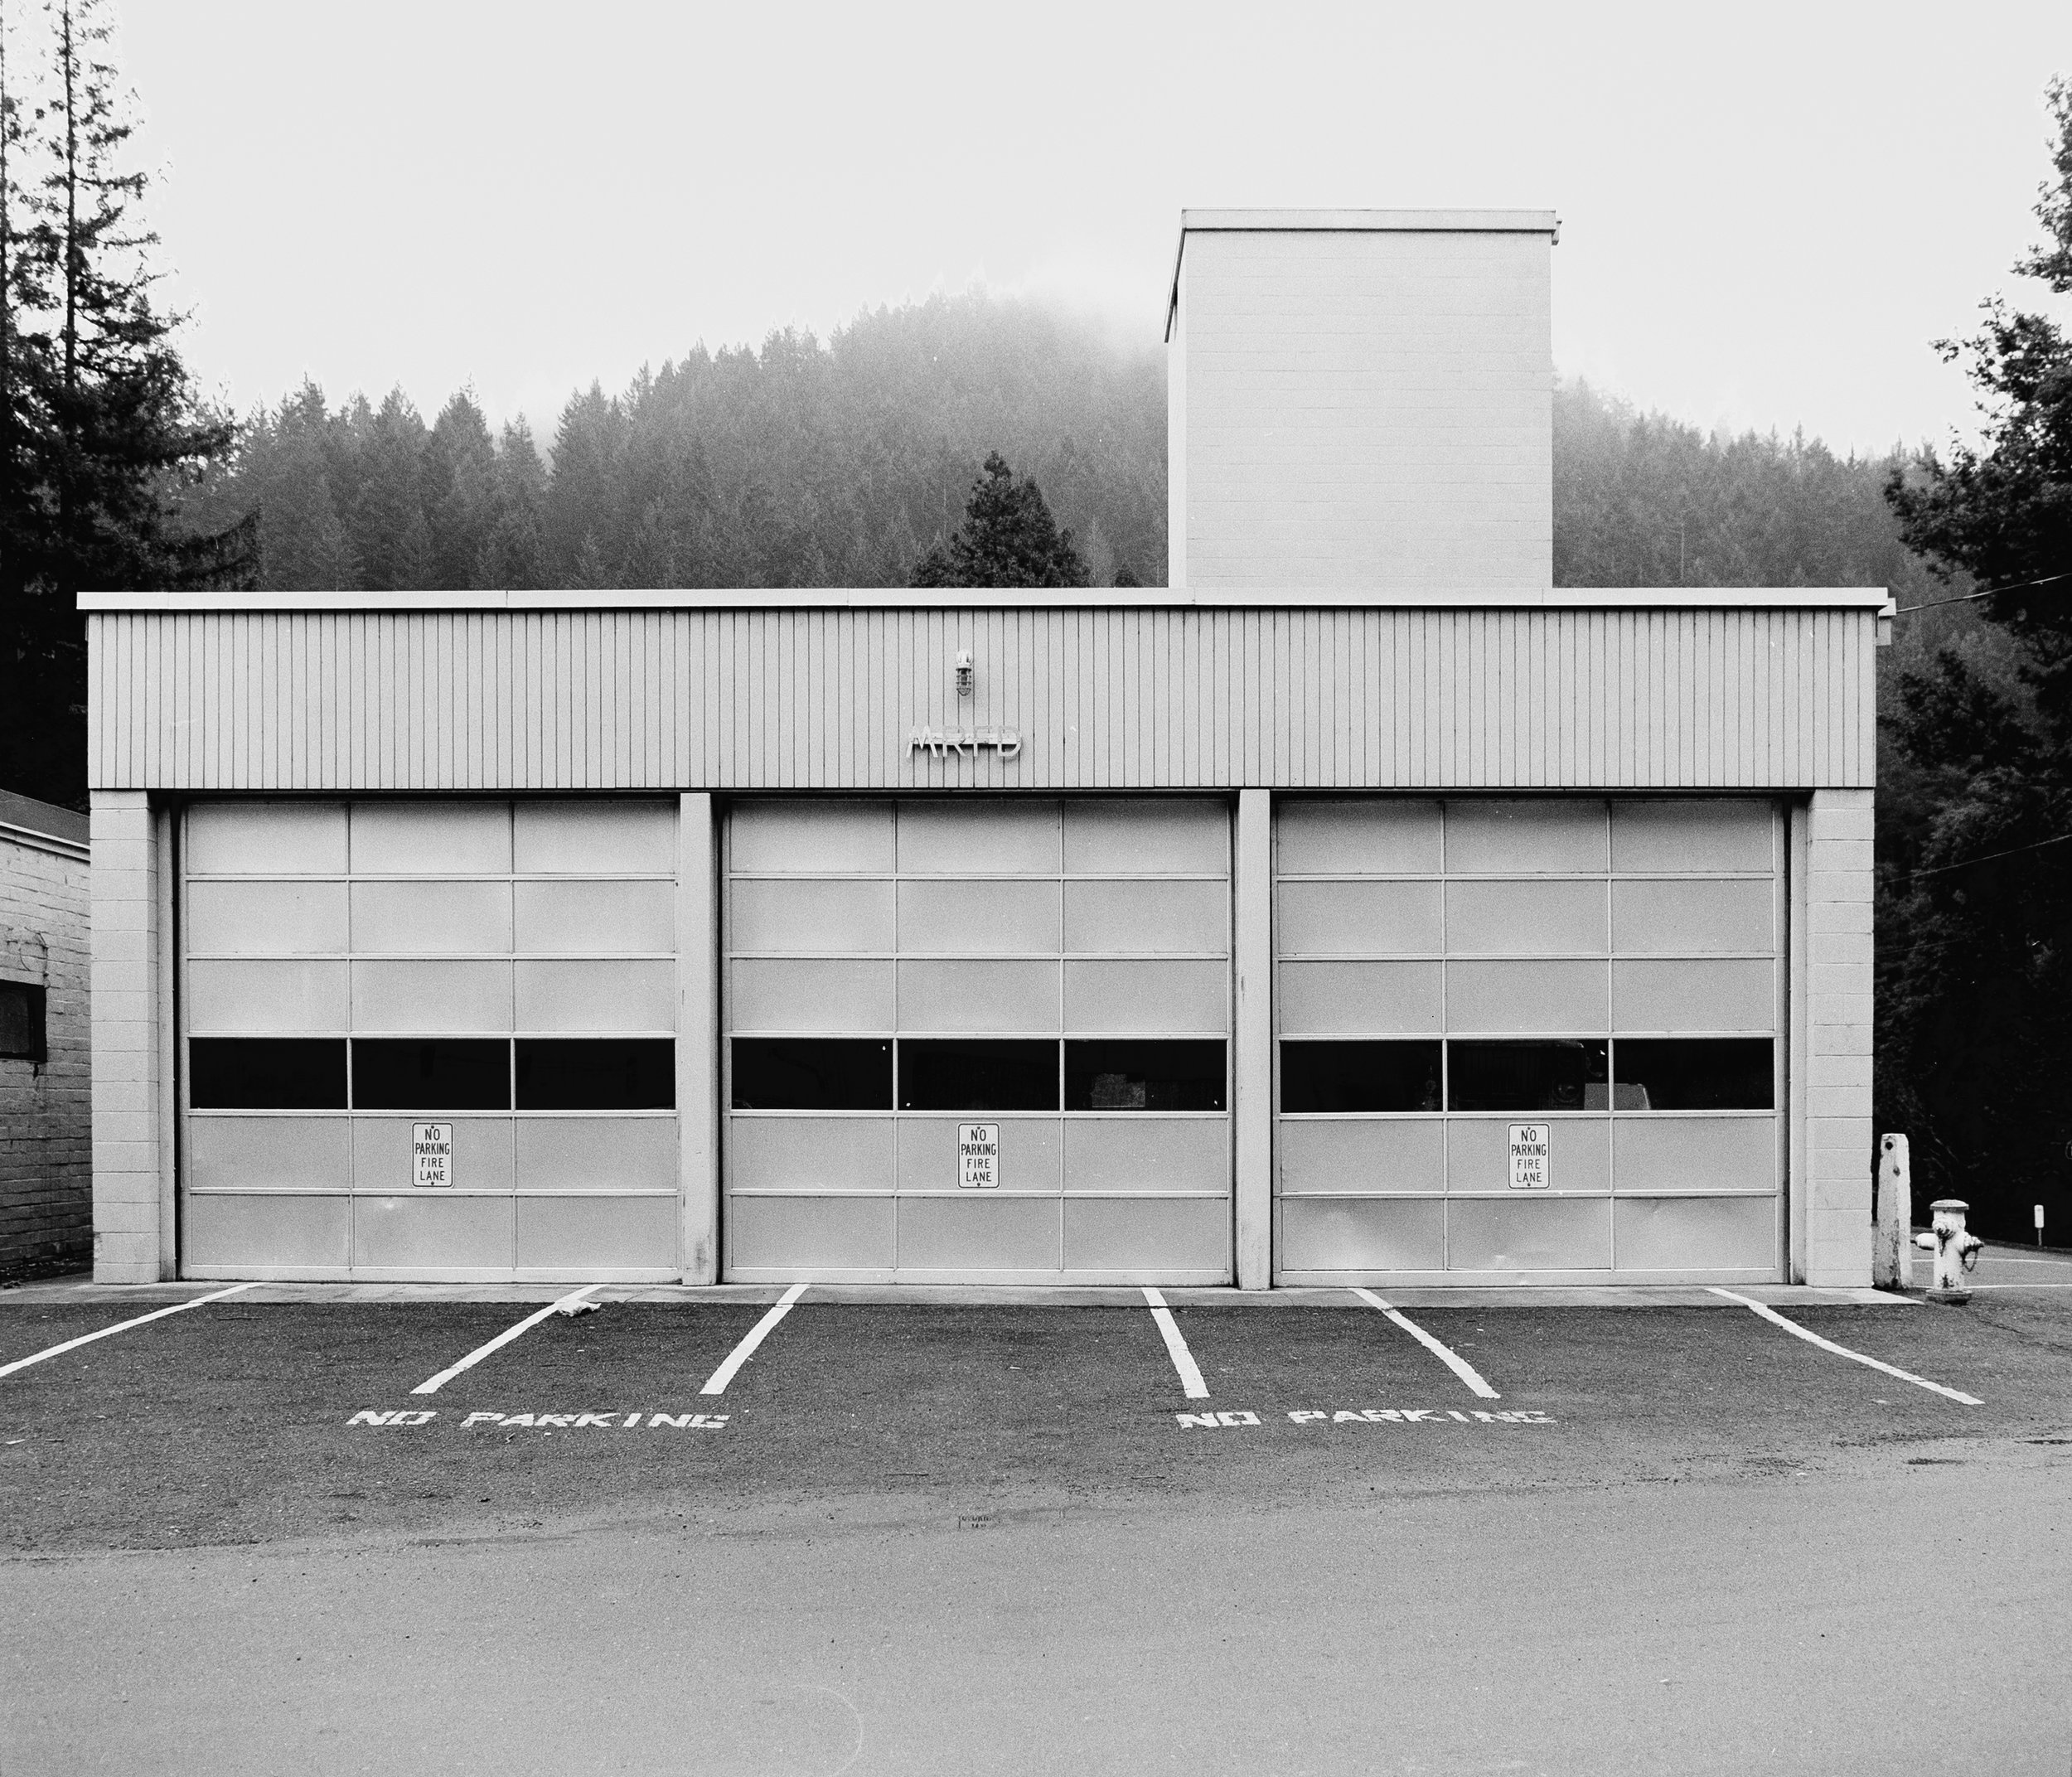   Fire Department, Oregon, 1975  